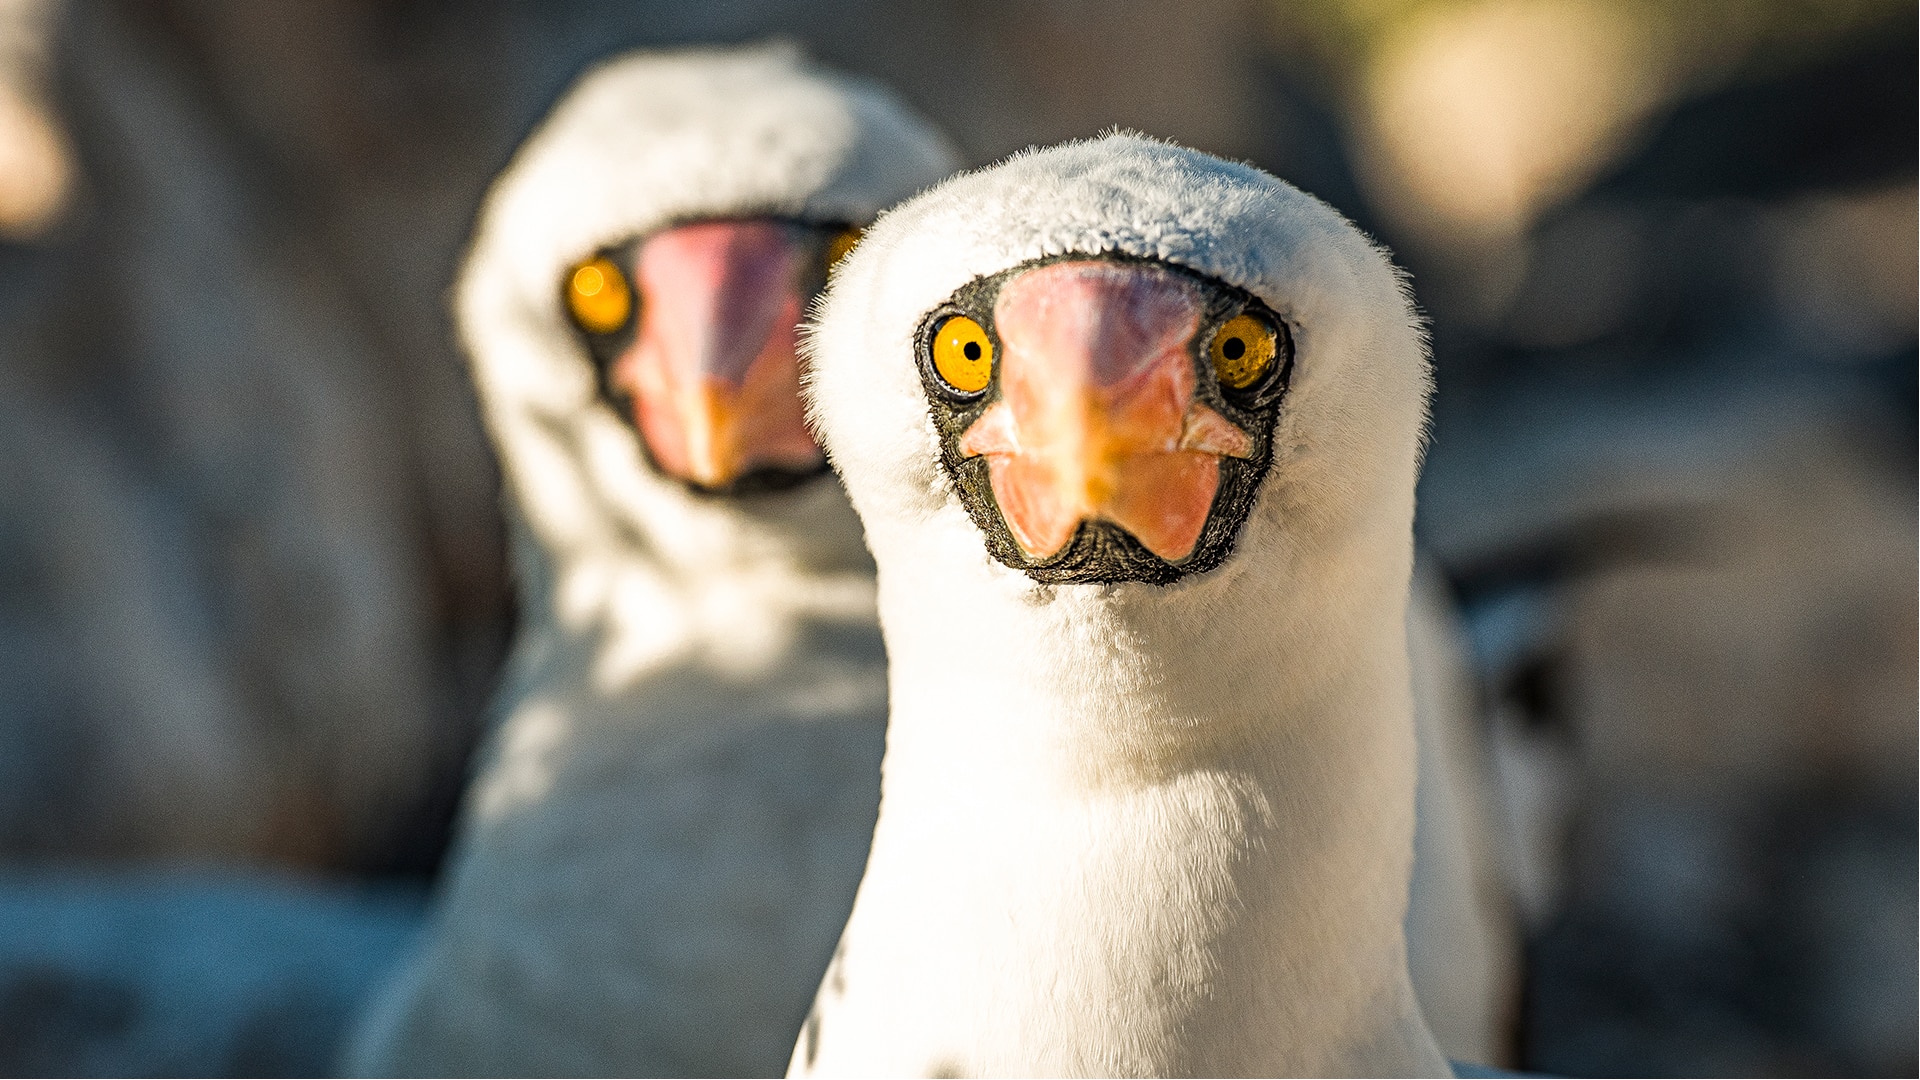 Nazca booby pair with orange beaks and yellow beady eyes look towards the camera